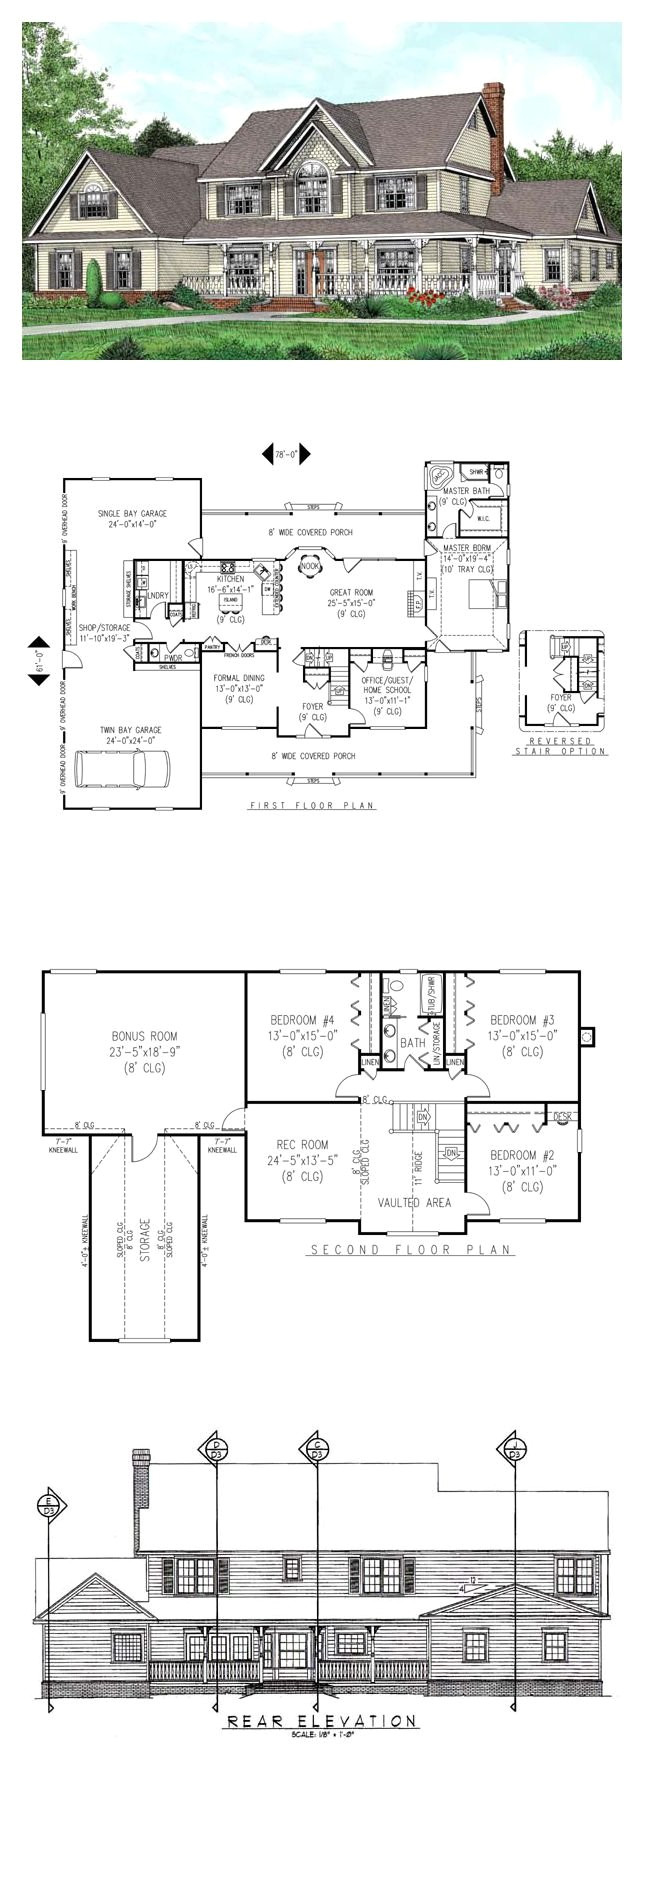 single story house plans with bonus room